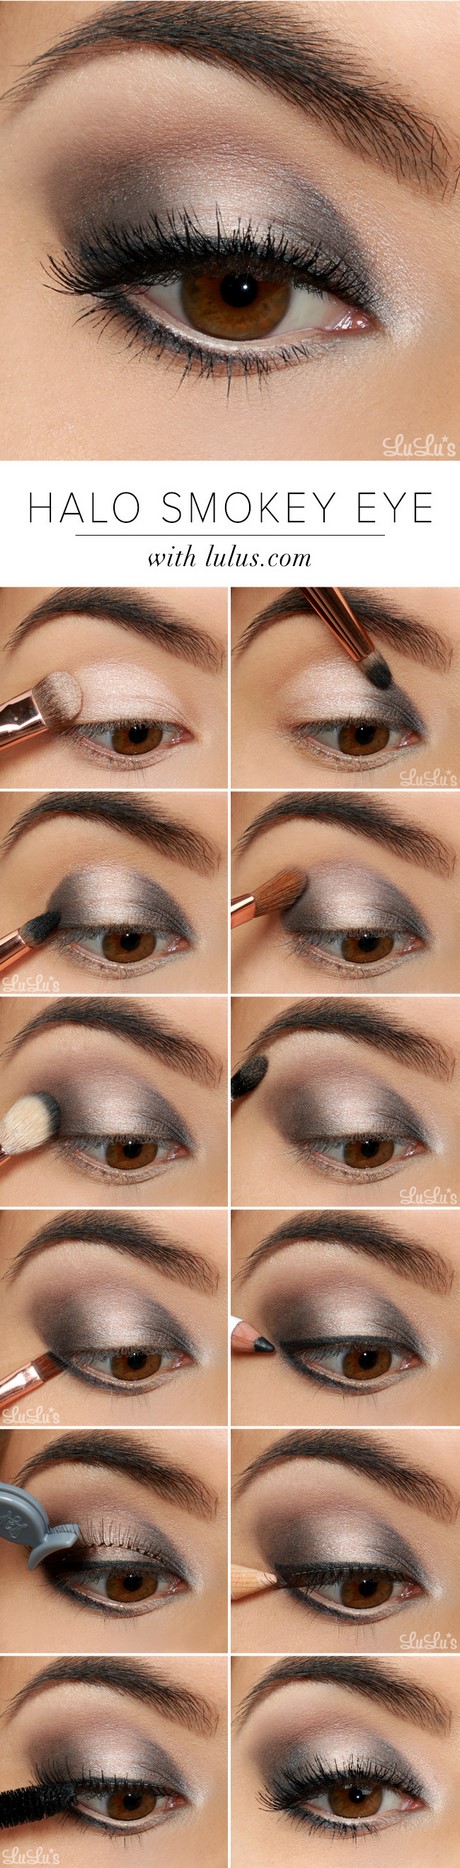 natural-smokey-eye-makeup-tutorial-16_2 Natuurlijke smokey eye make-up tutorial